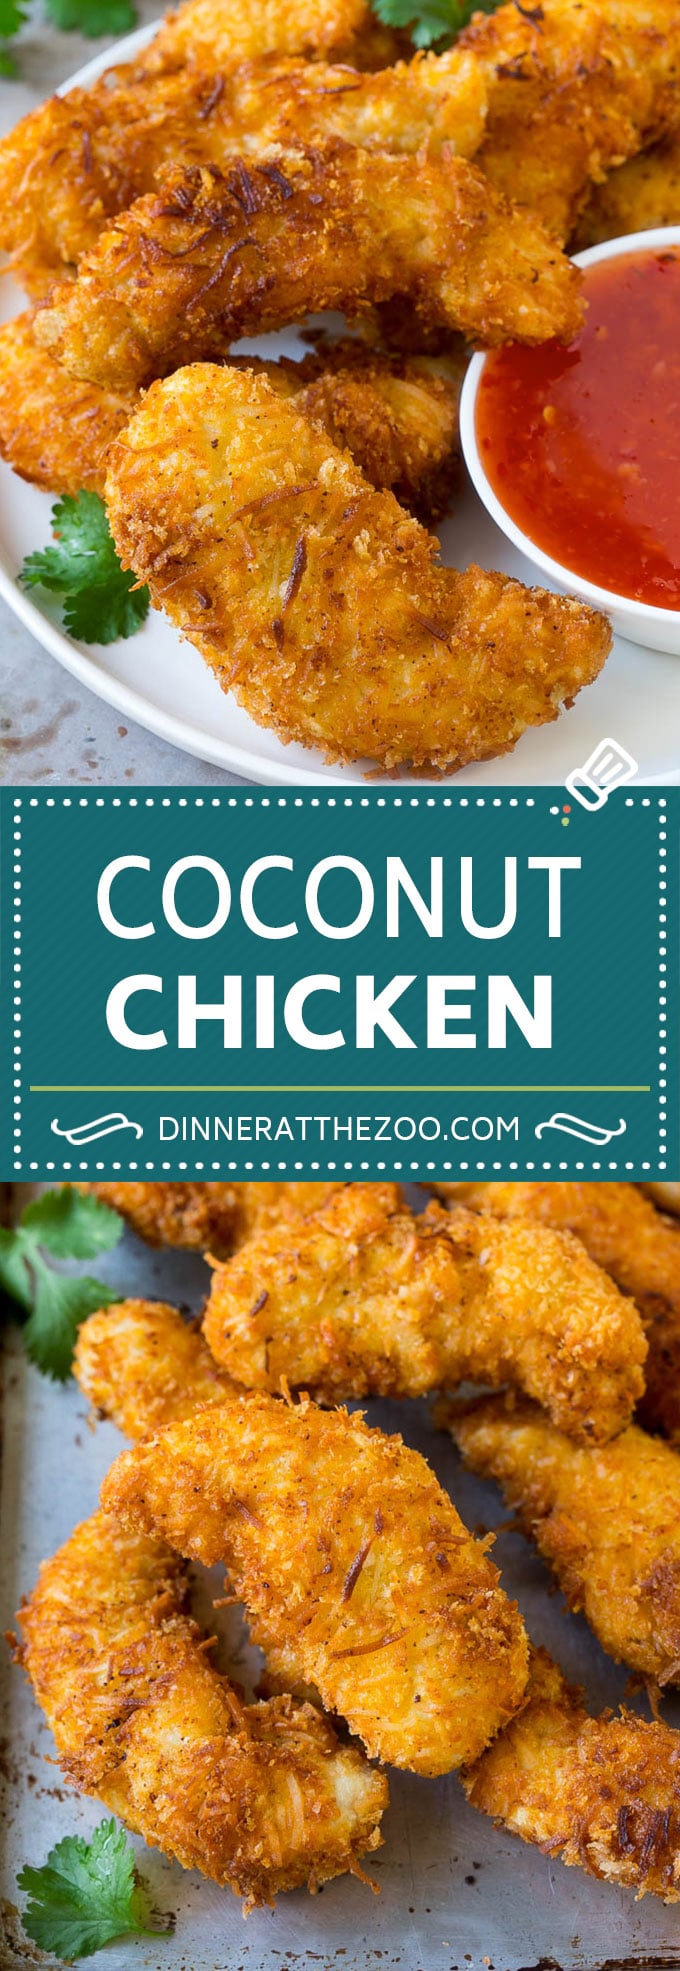 Coconut Chicken Recipe | Fried Chicken | Chicken Fingers #chicken #coconut #appetizer #dinner #dinneratthezoo